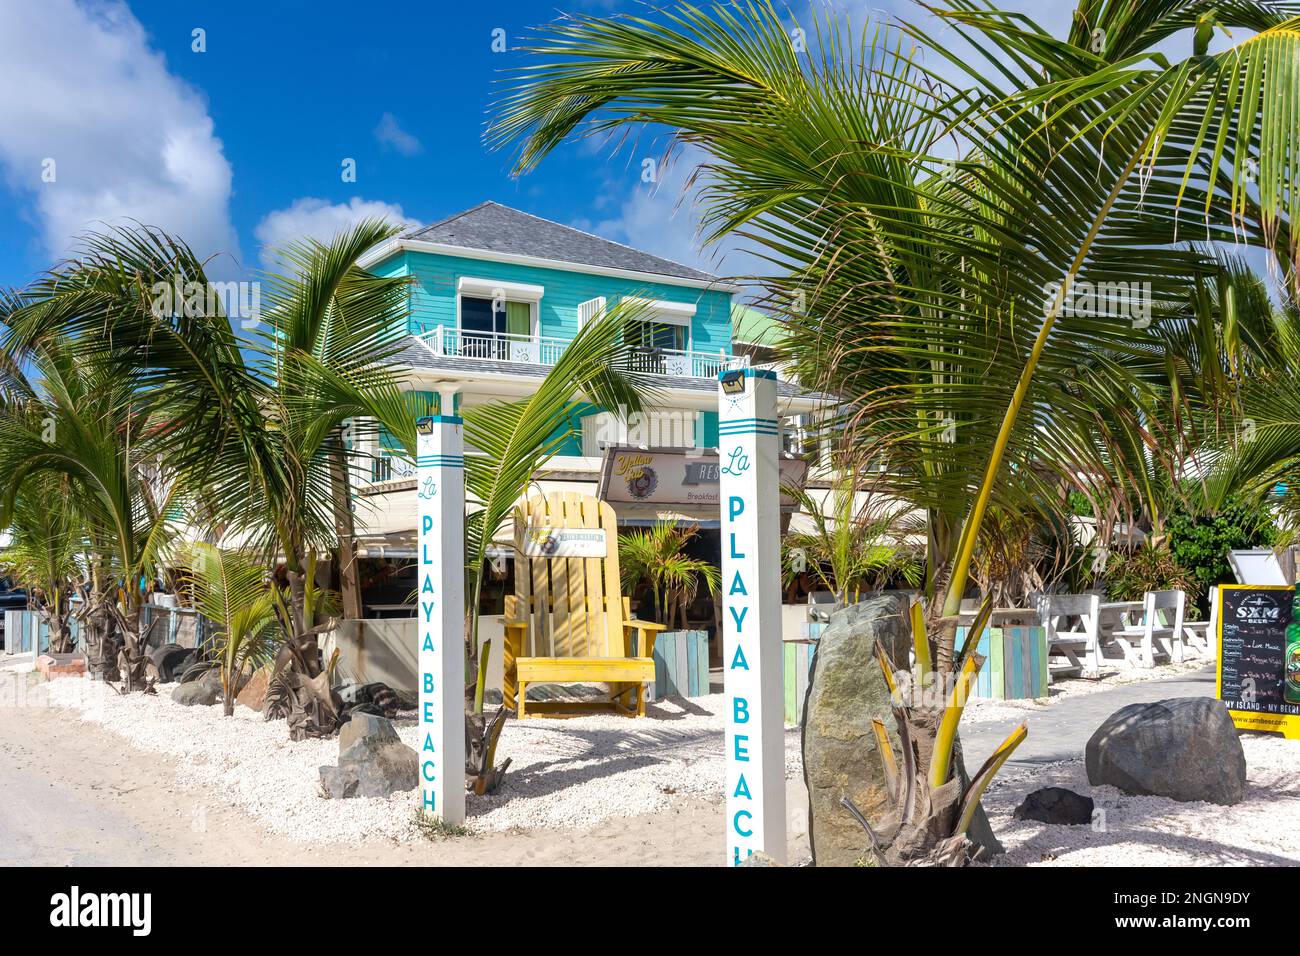 Entrance to La Playa Orient Bay Bar & Restaurant, Orient Bay (Baie Orientale), St Martin (Saint-Martin), Lesser Antilles, Caribbean Stock Photo